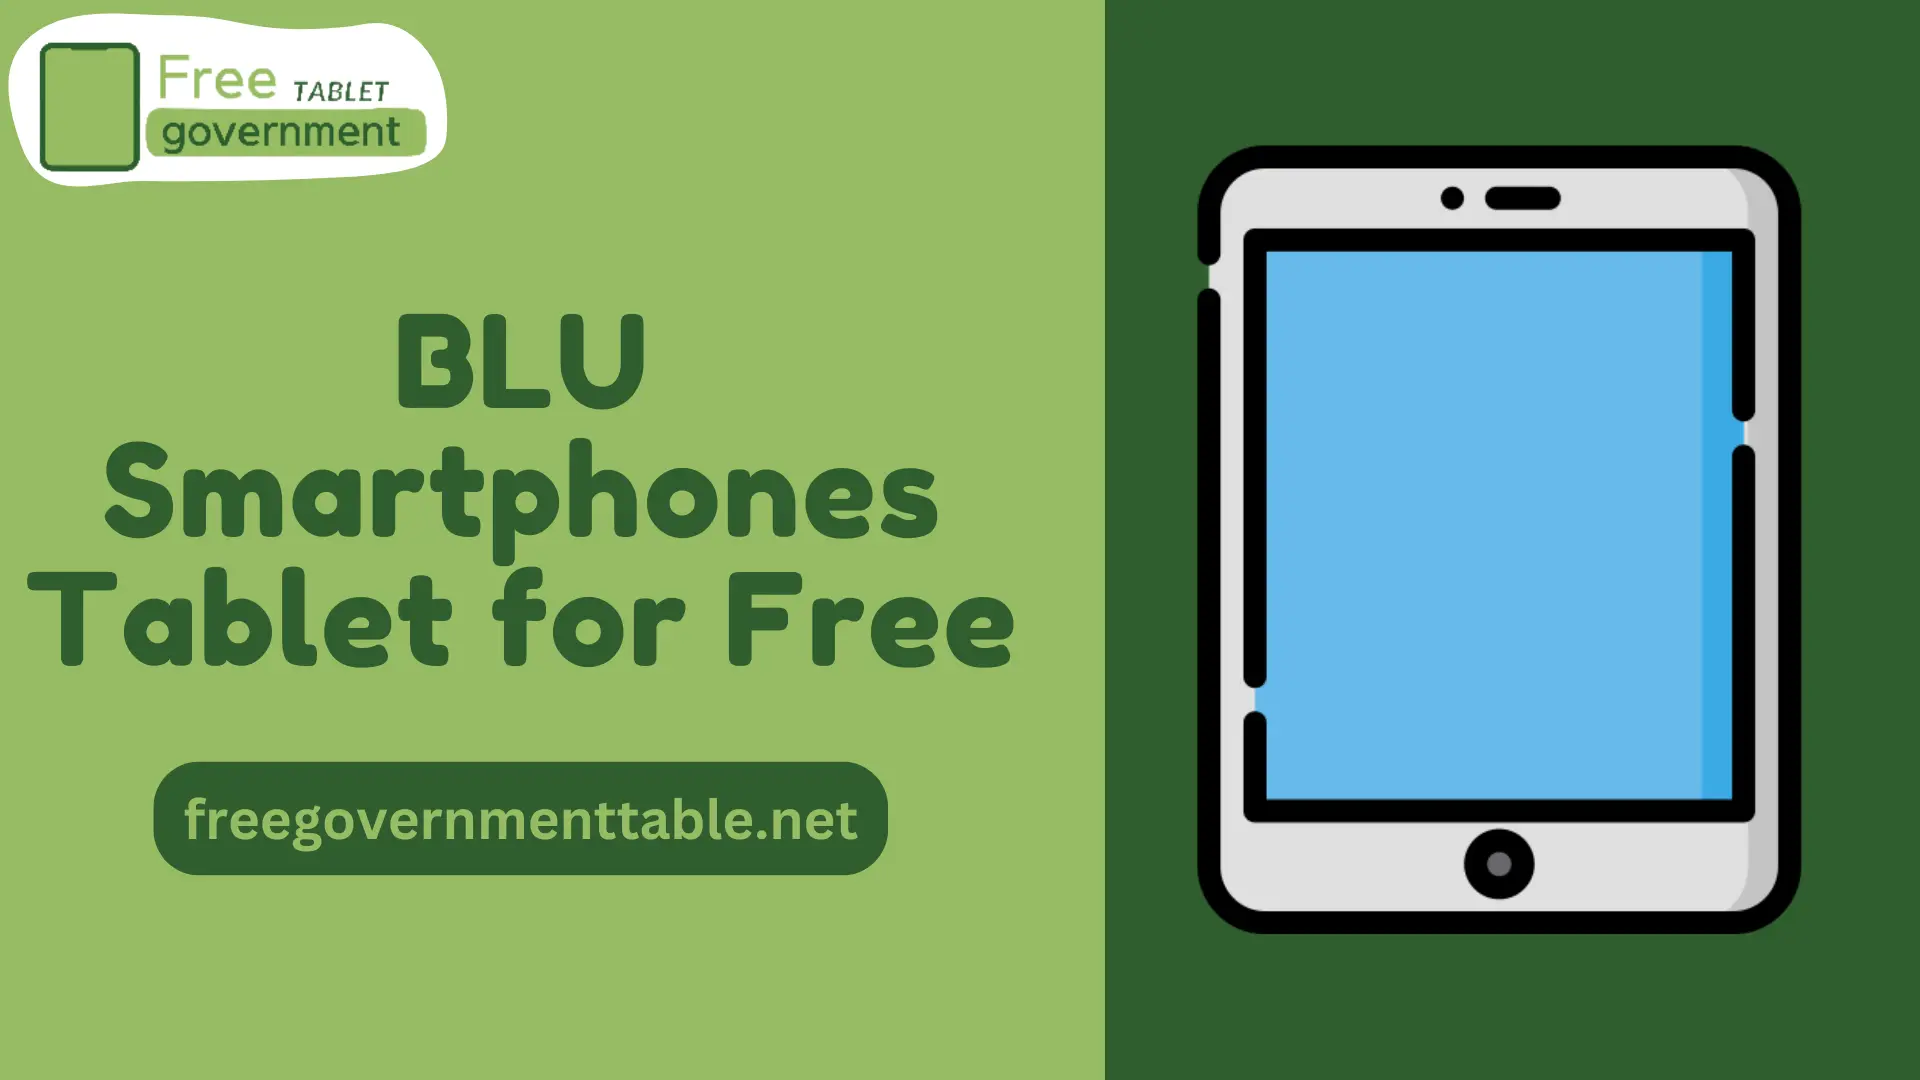 BLU Smartphones Tablet Free